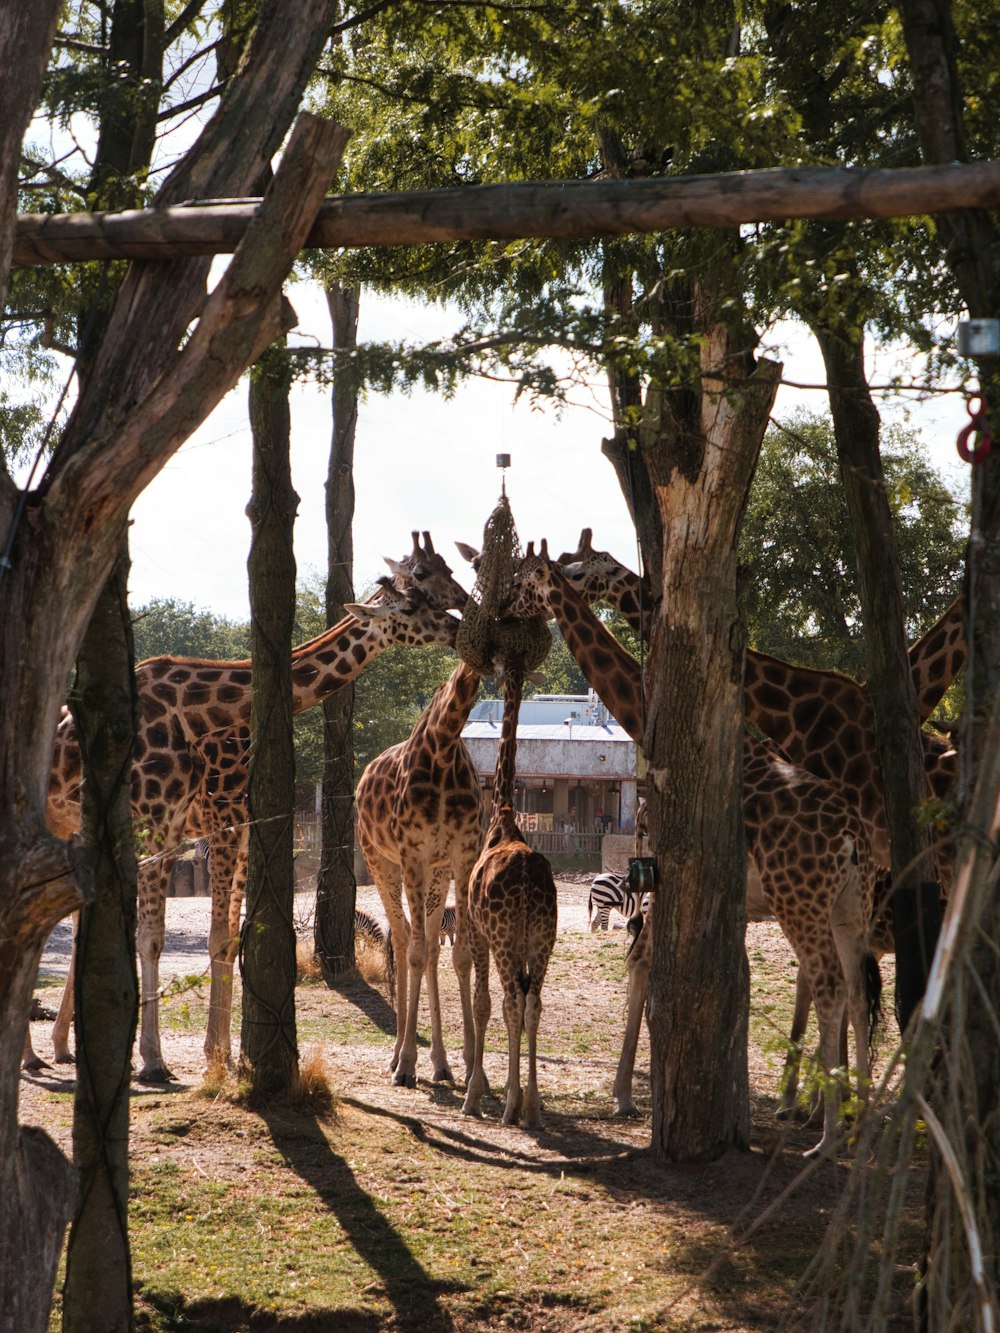 giraffes in a zoo exhibit